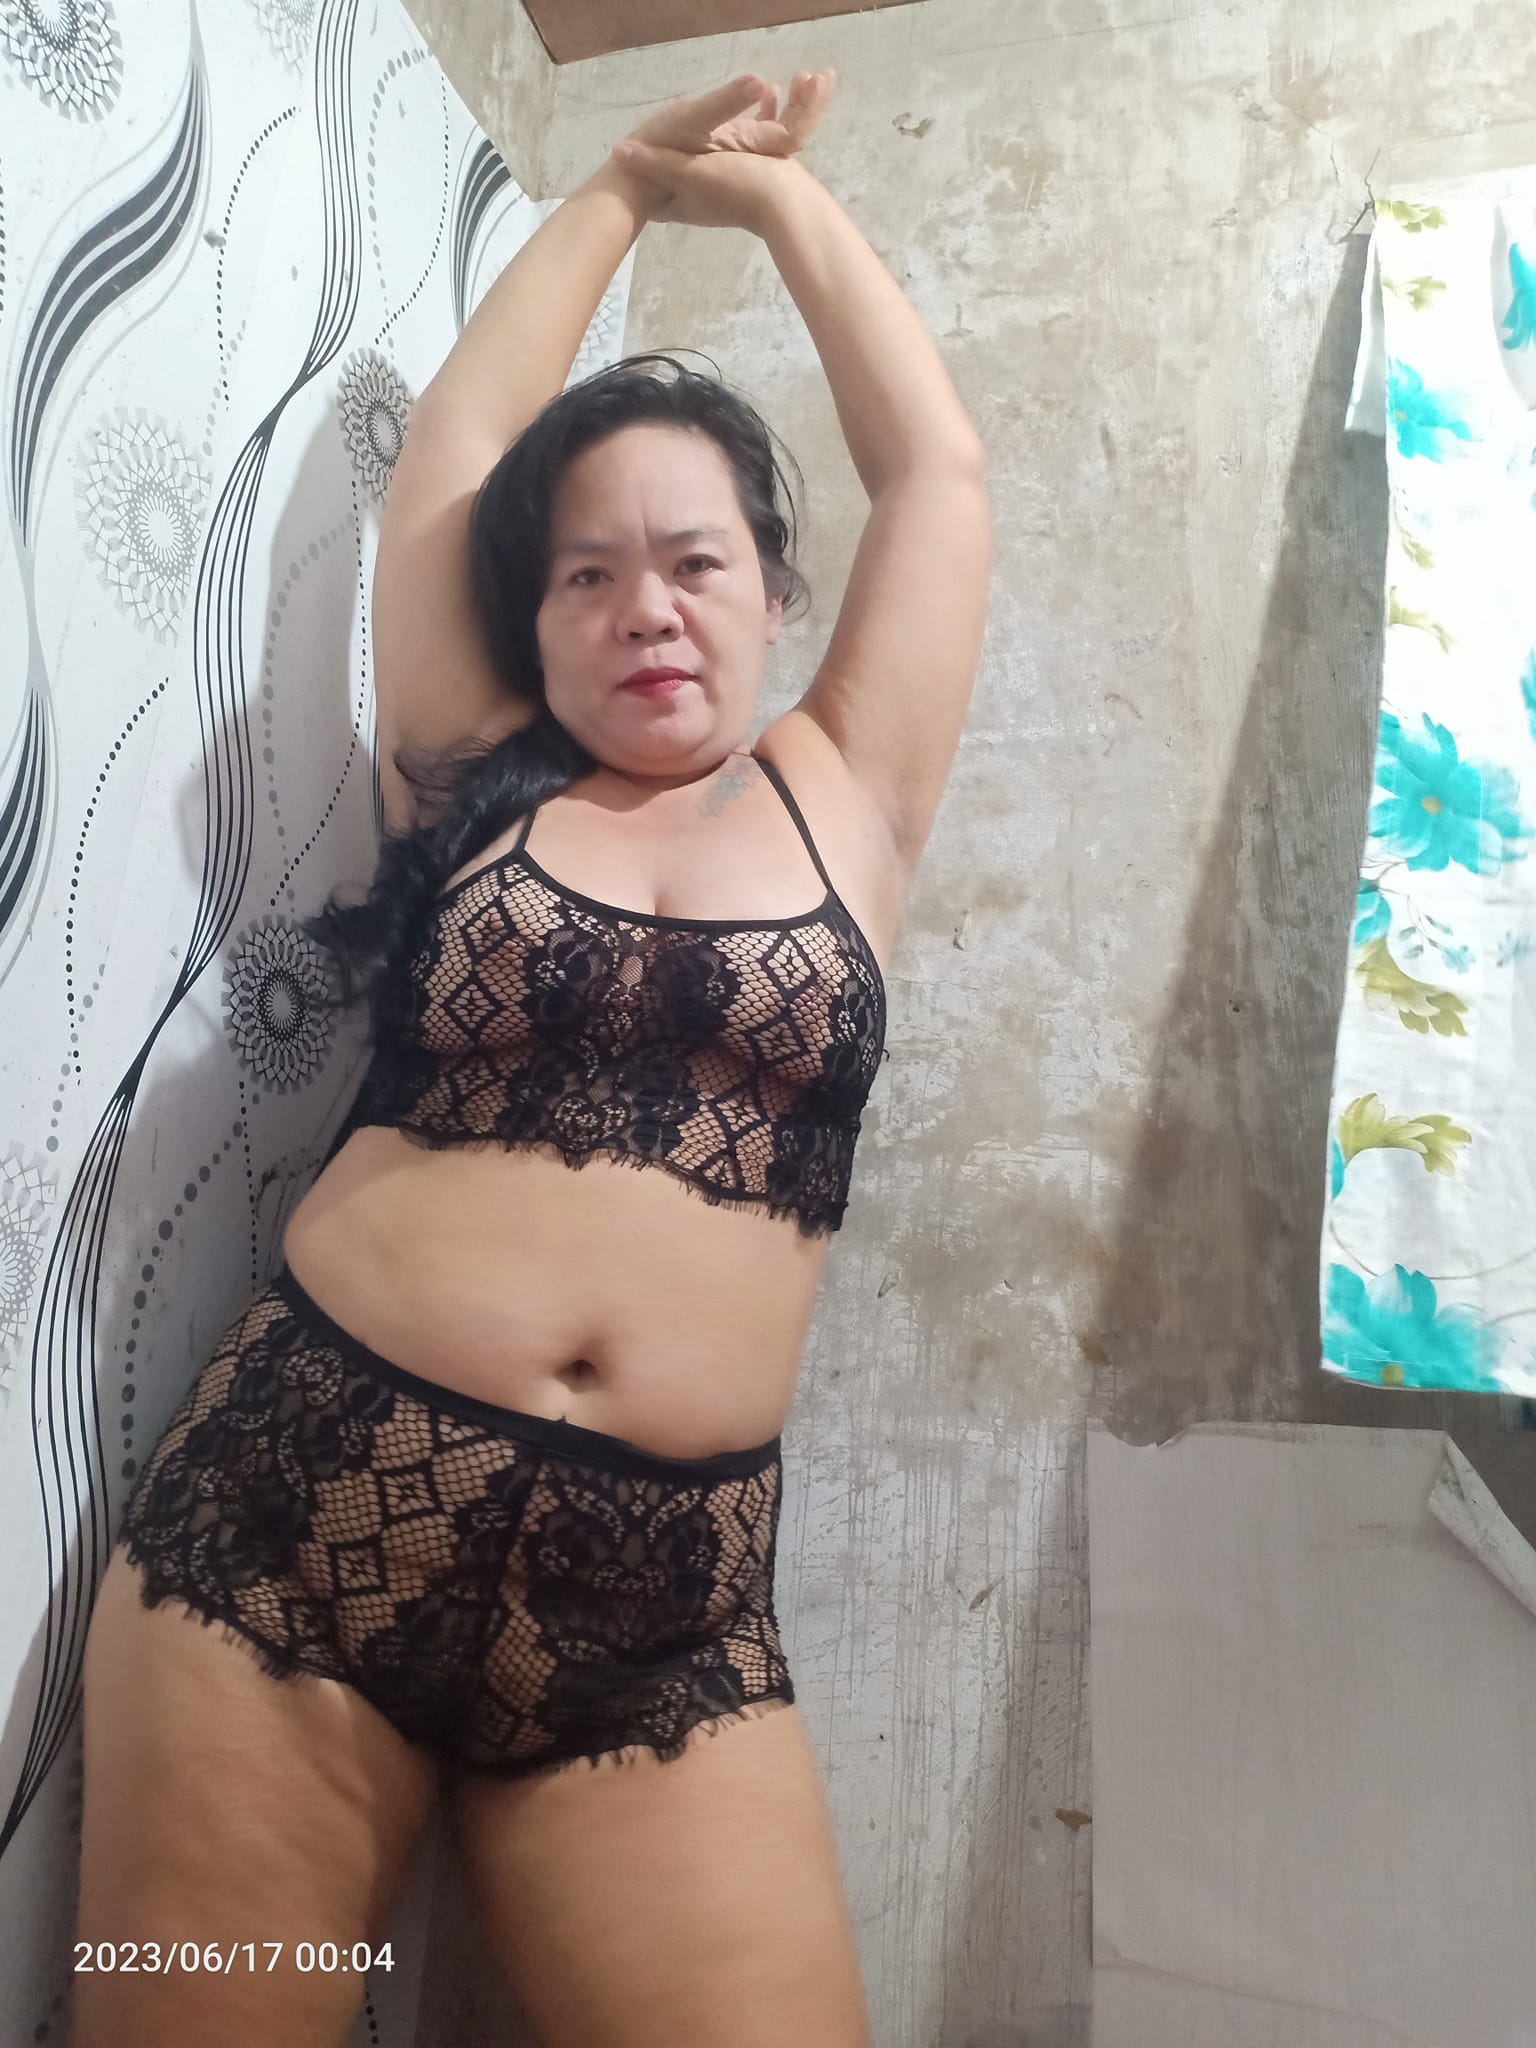 Filipina Mature queen - 347001892_217685777878861_4675118031005696841_n  Foto Porno - EPORNER